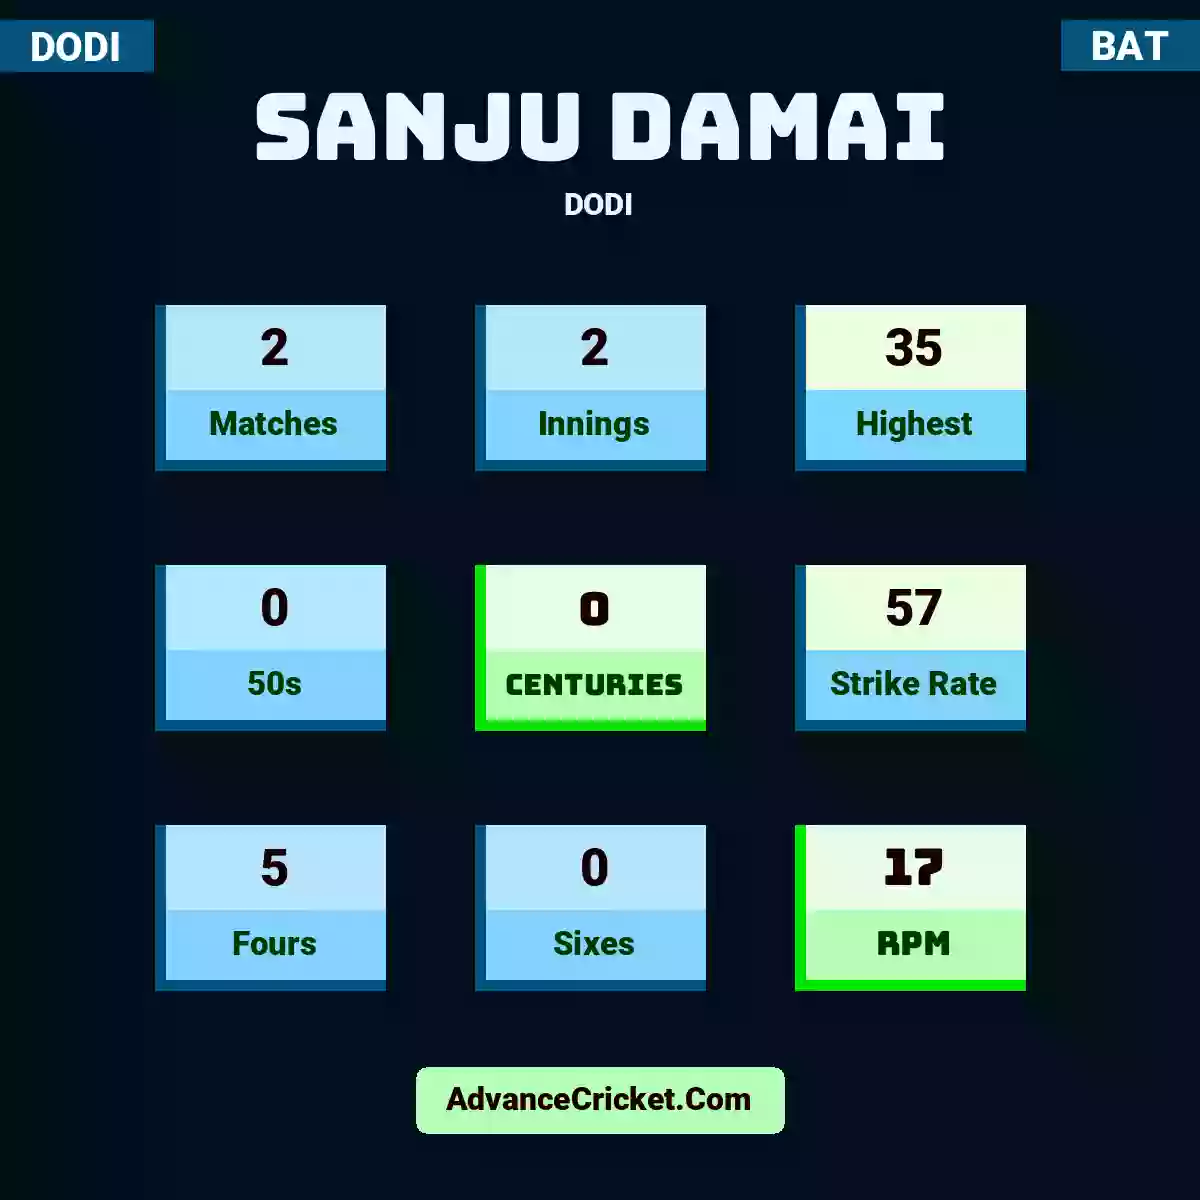 Sanju Damai DODI , Sanju Damai played 2 matches, scored 35 runs as highest, 0 half-centuries, and 0 centuries, with a strike rate of 57. S.Damai hit 5 fours and 0 sixes, with an RPM of 17.